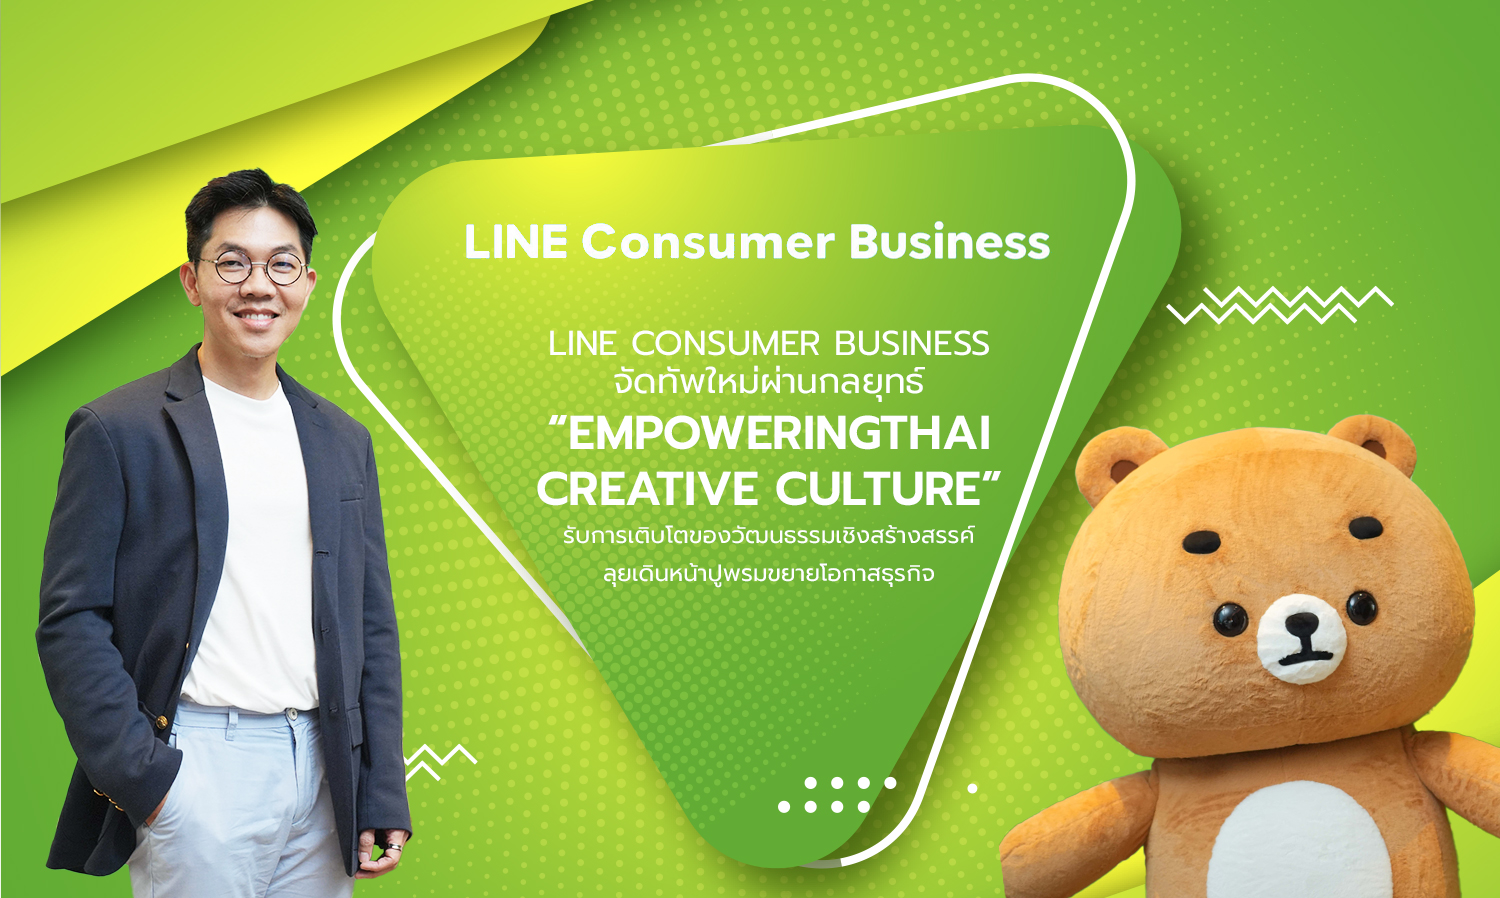 LINE Consumer Business จัดทัพใหม่ผ่านกลยุทธ์ “EmpoweringThai Creative Culture” รับการเติบโตของวัฒนธรรมเชิงสร้างสรรค์ ลุยเดินหน้าปูพรมขยายโอกาสธุรกิจ